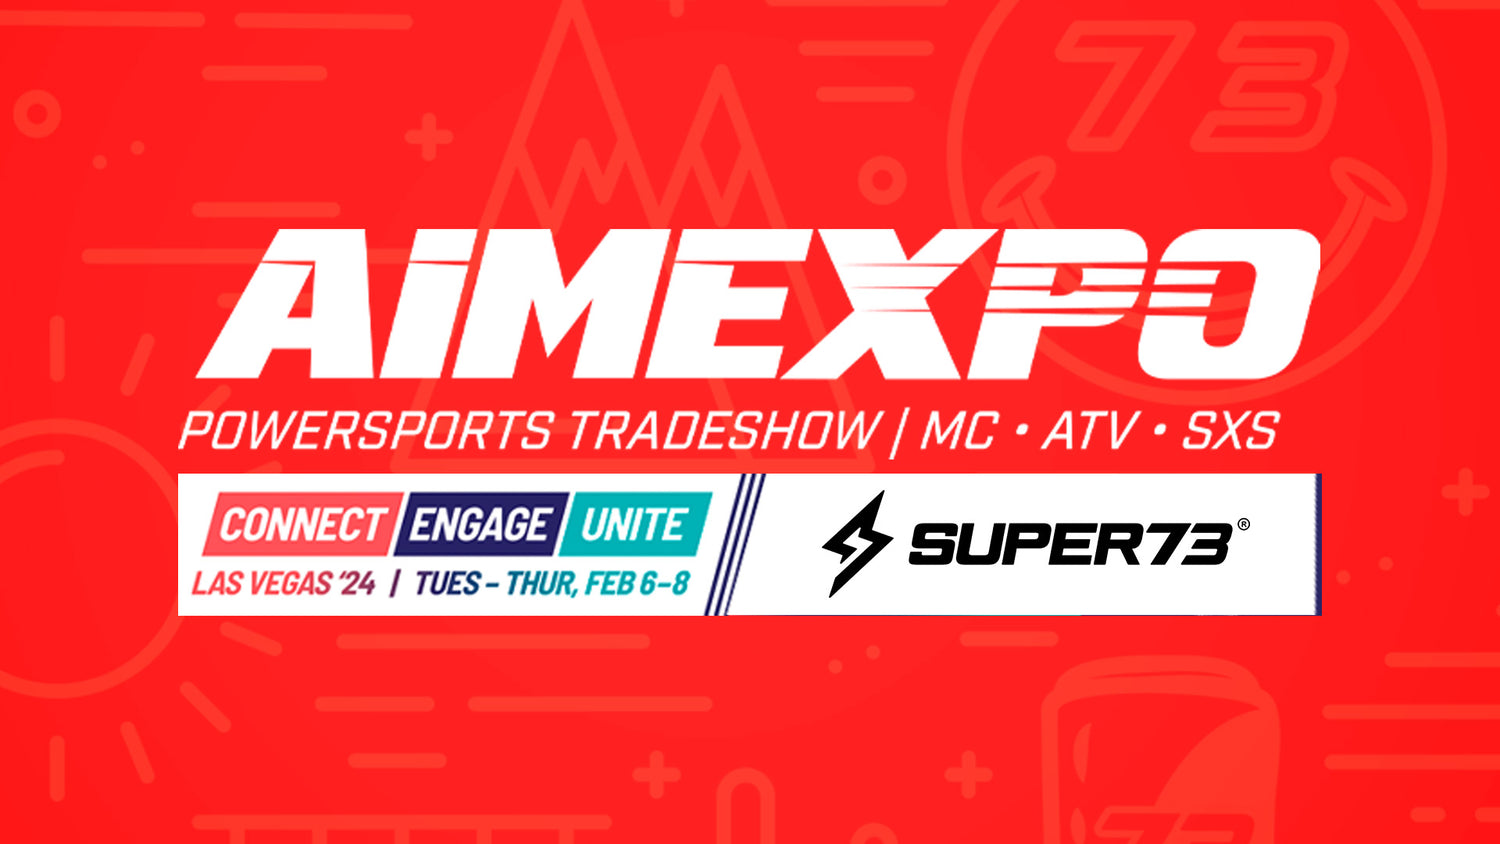 aimexpo powersports tradeshow super73